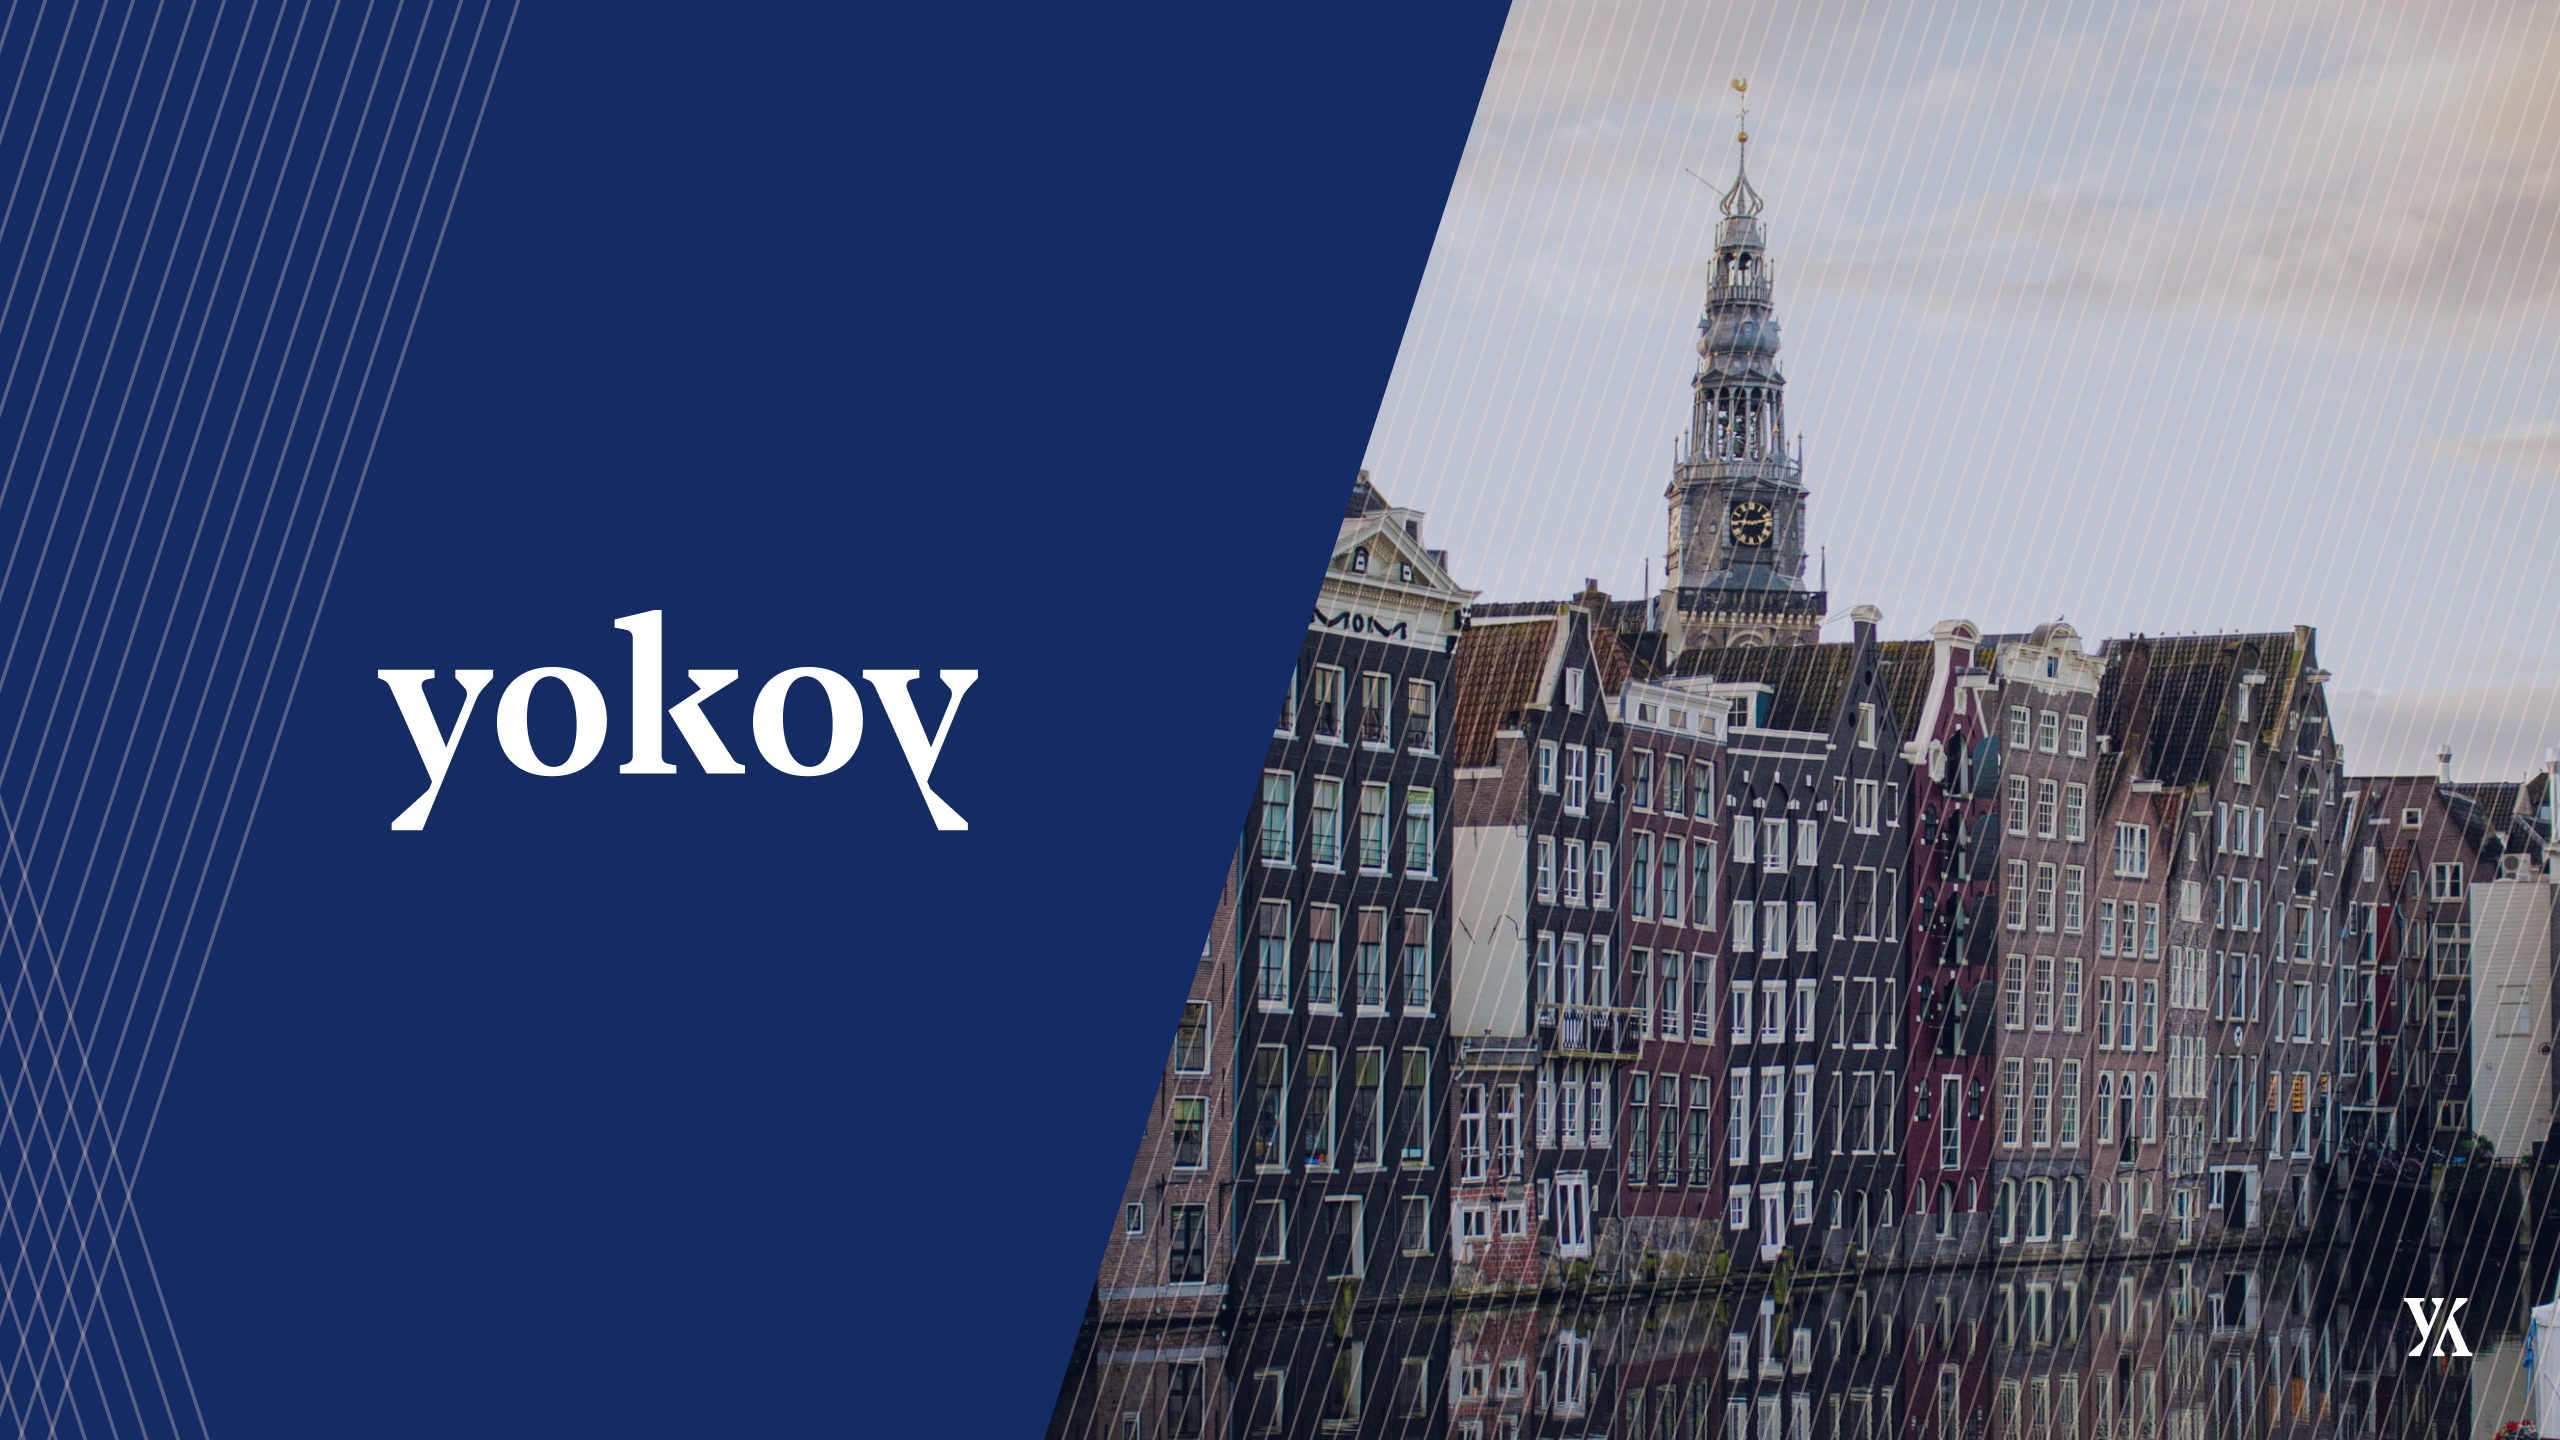 Yokoy opens its new hub for European operations ins Amsterdam.